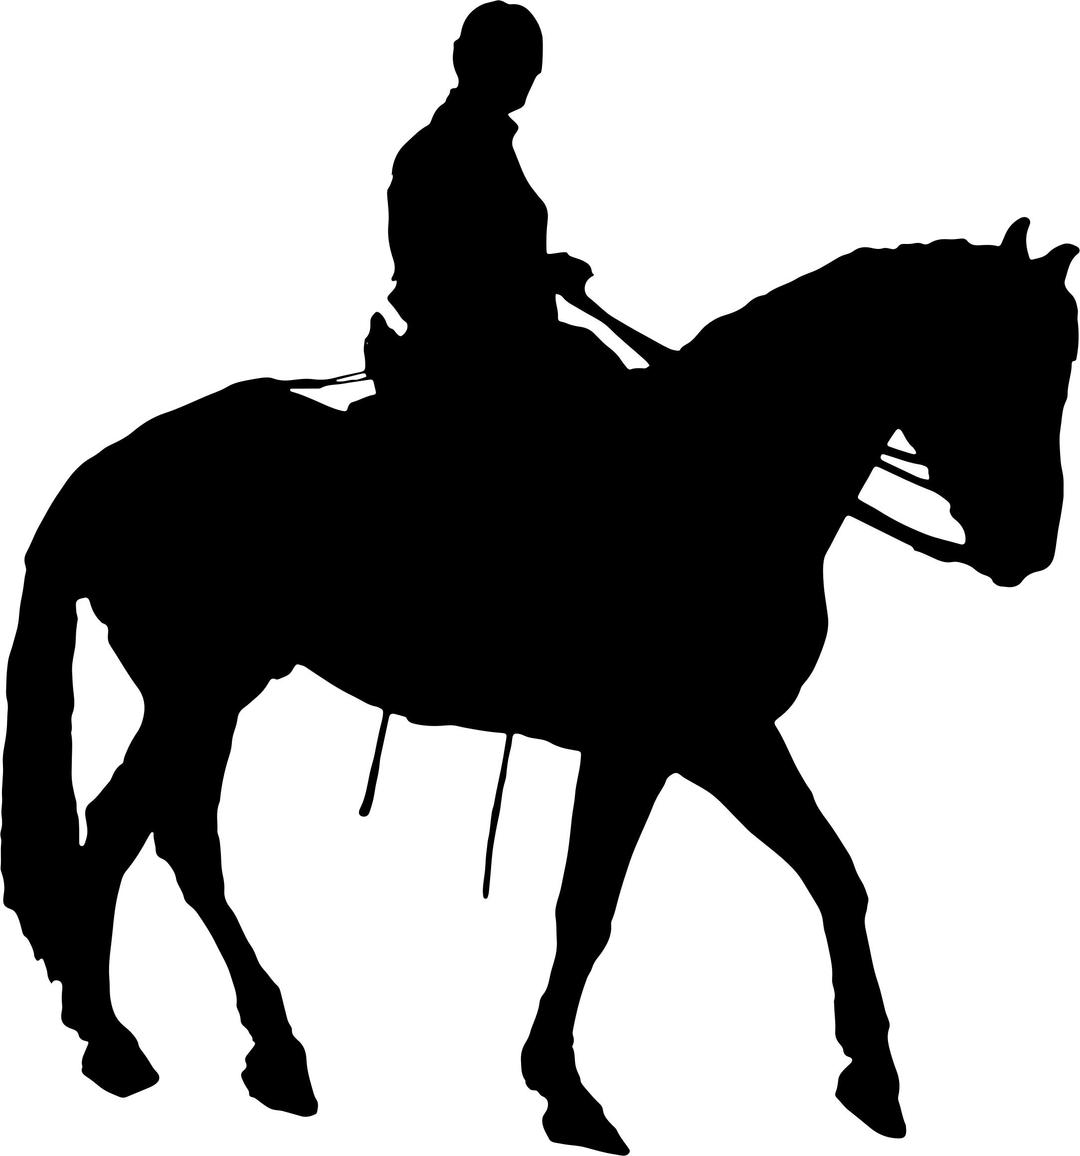 Man Riding Horse Silhouette png transparent